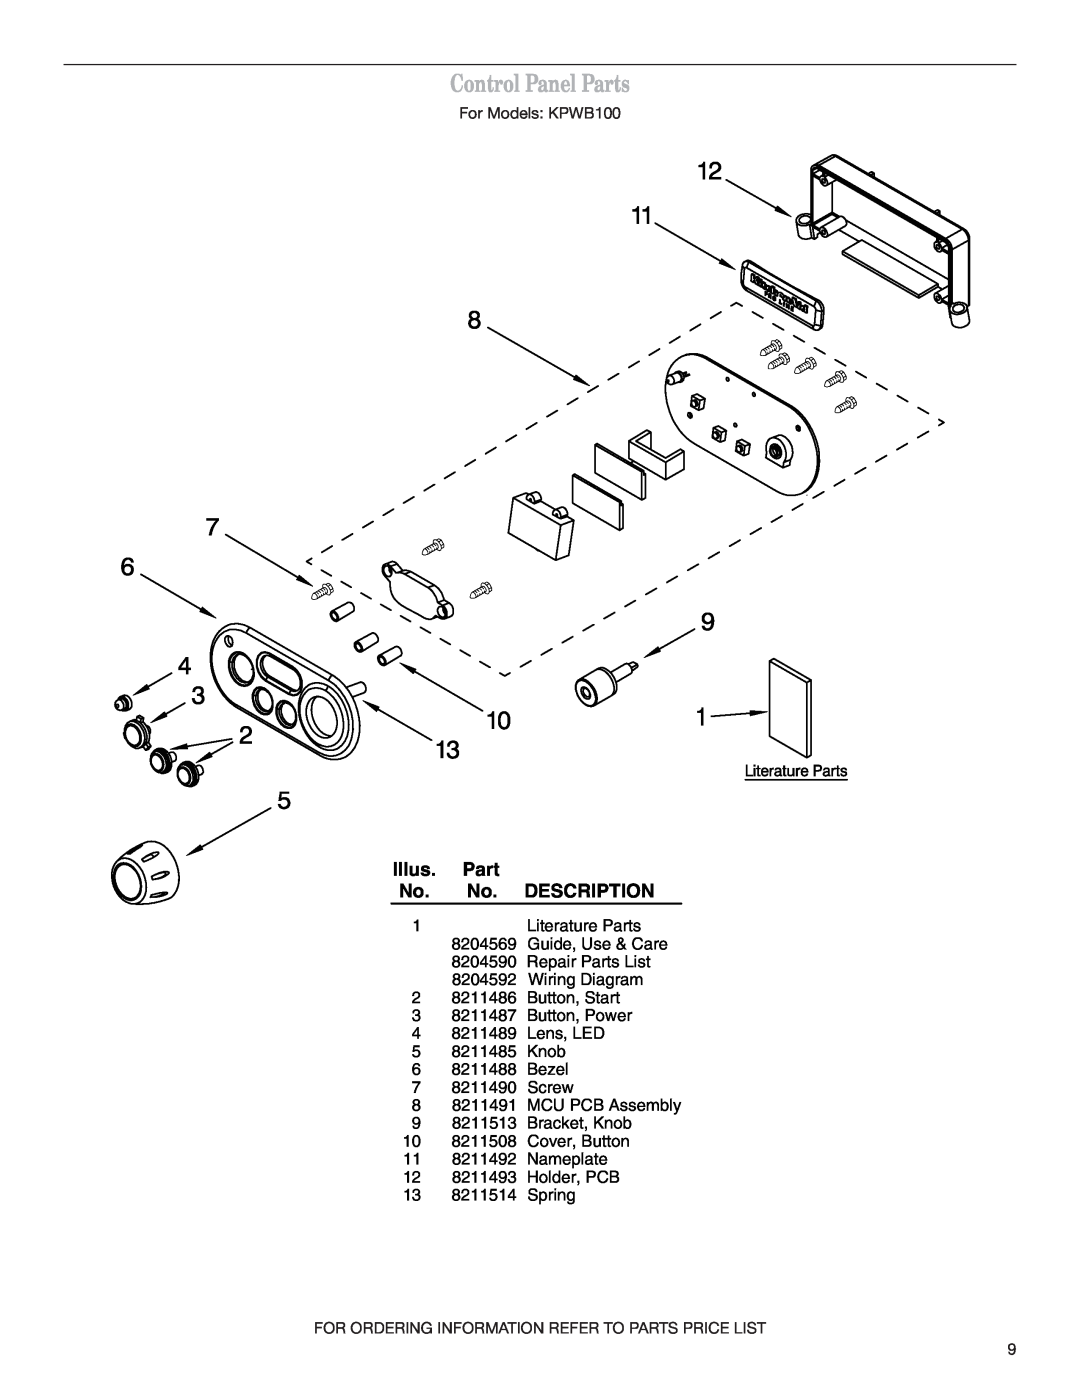 KitchenAid KPWB100 service manual Control Panel Parts, Illus. Part No. No. DESCRIPTION 